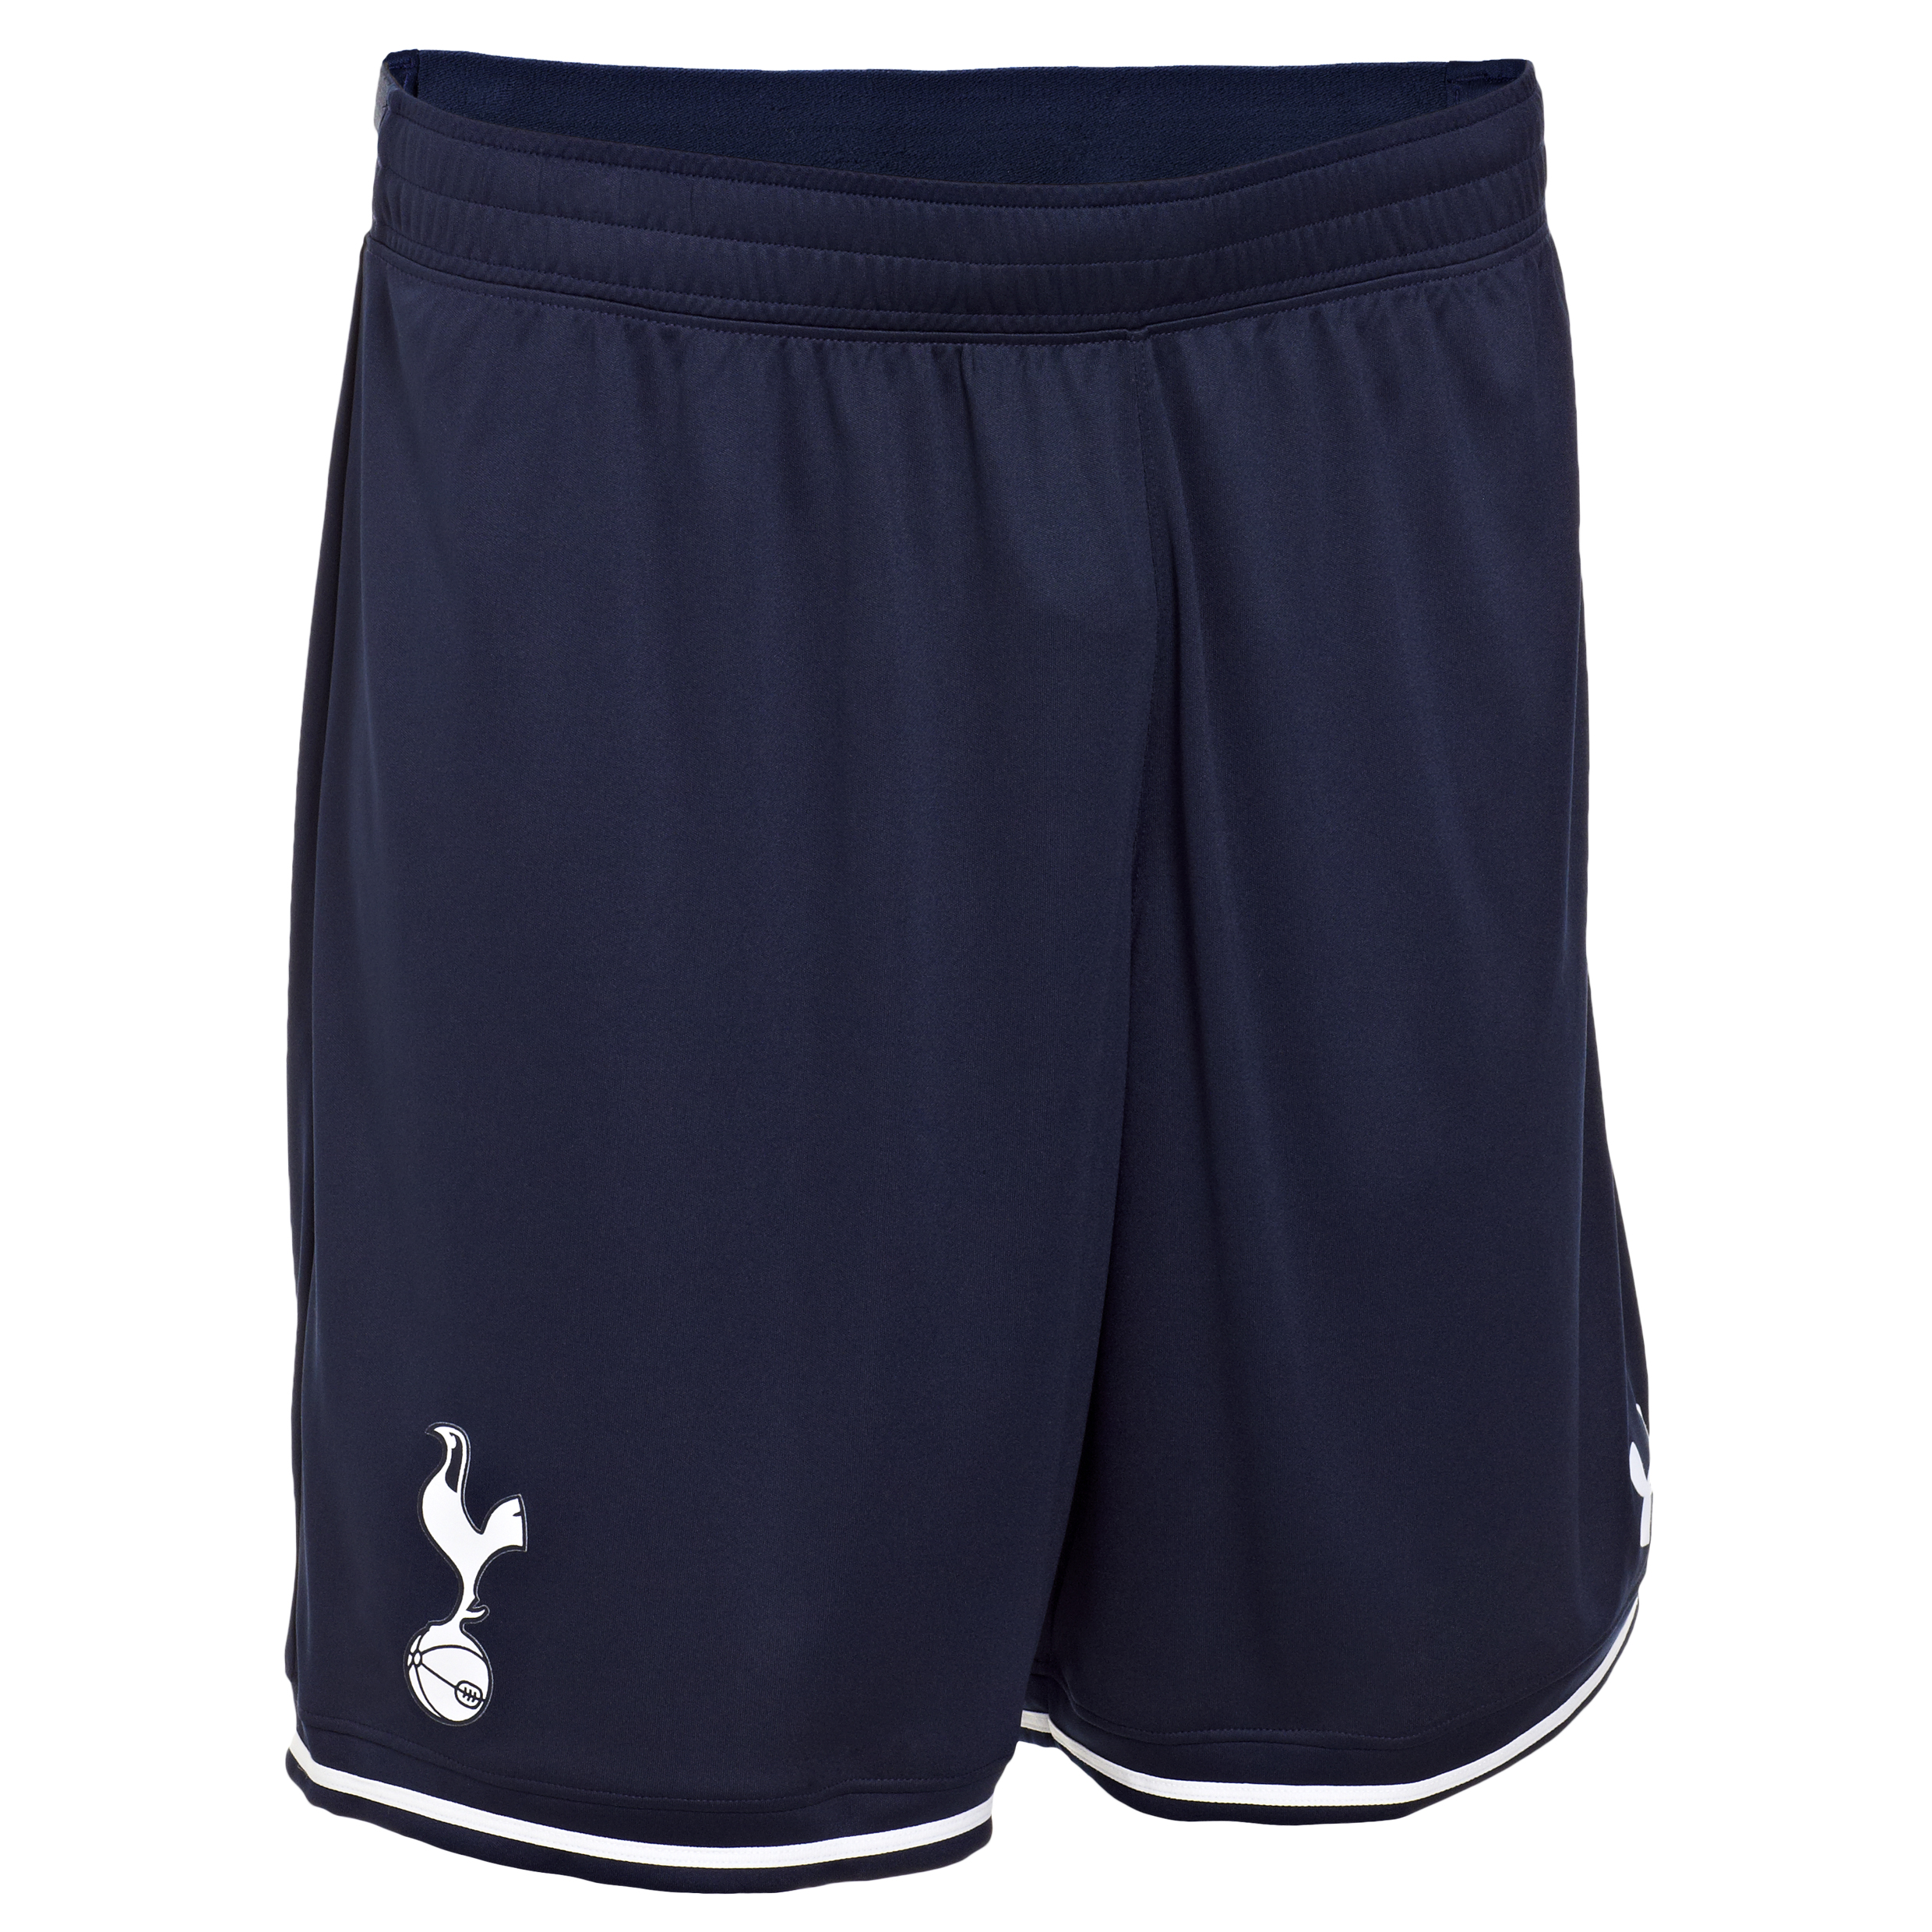 Tottenham Hotspur Home Shorts 2013/14